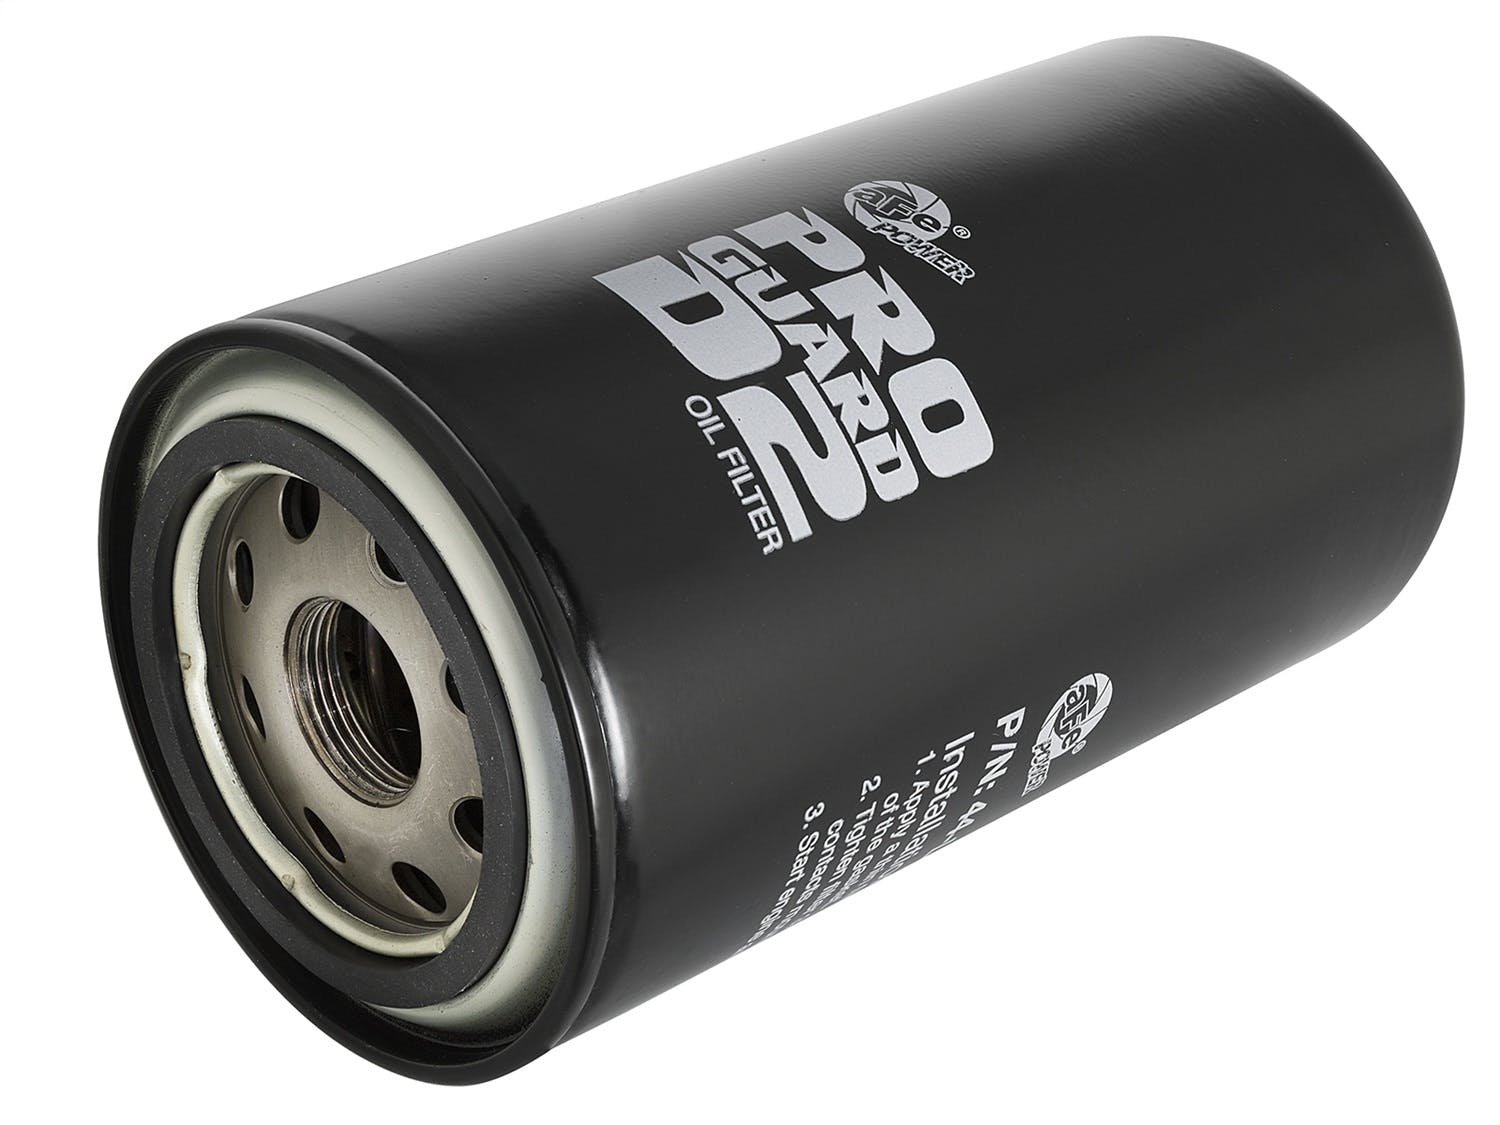 AFE 44-LF024-MB Pro GUARD D2 Oil Filter